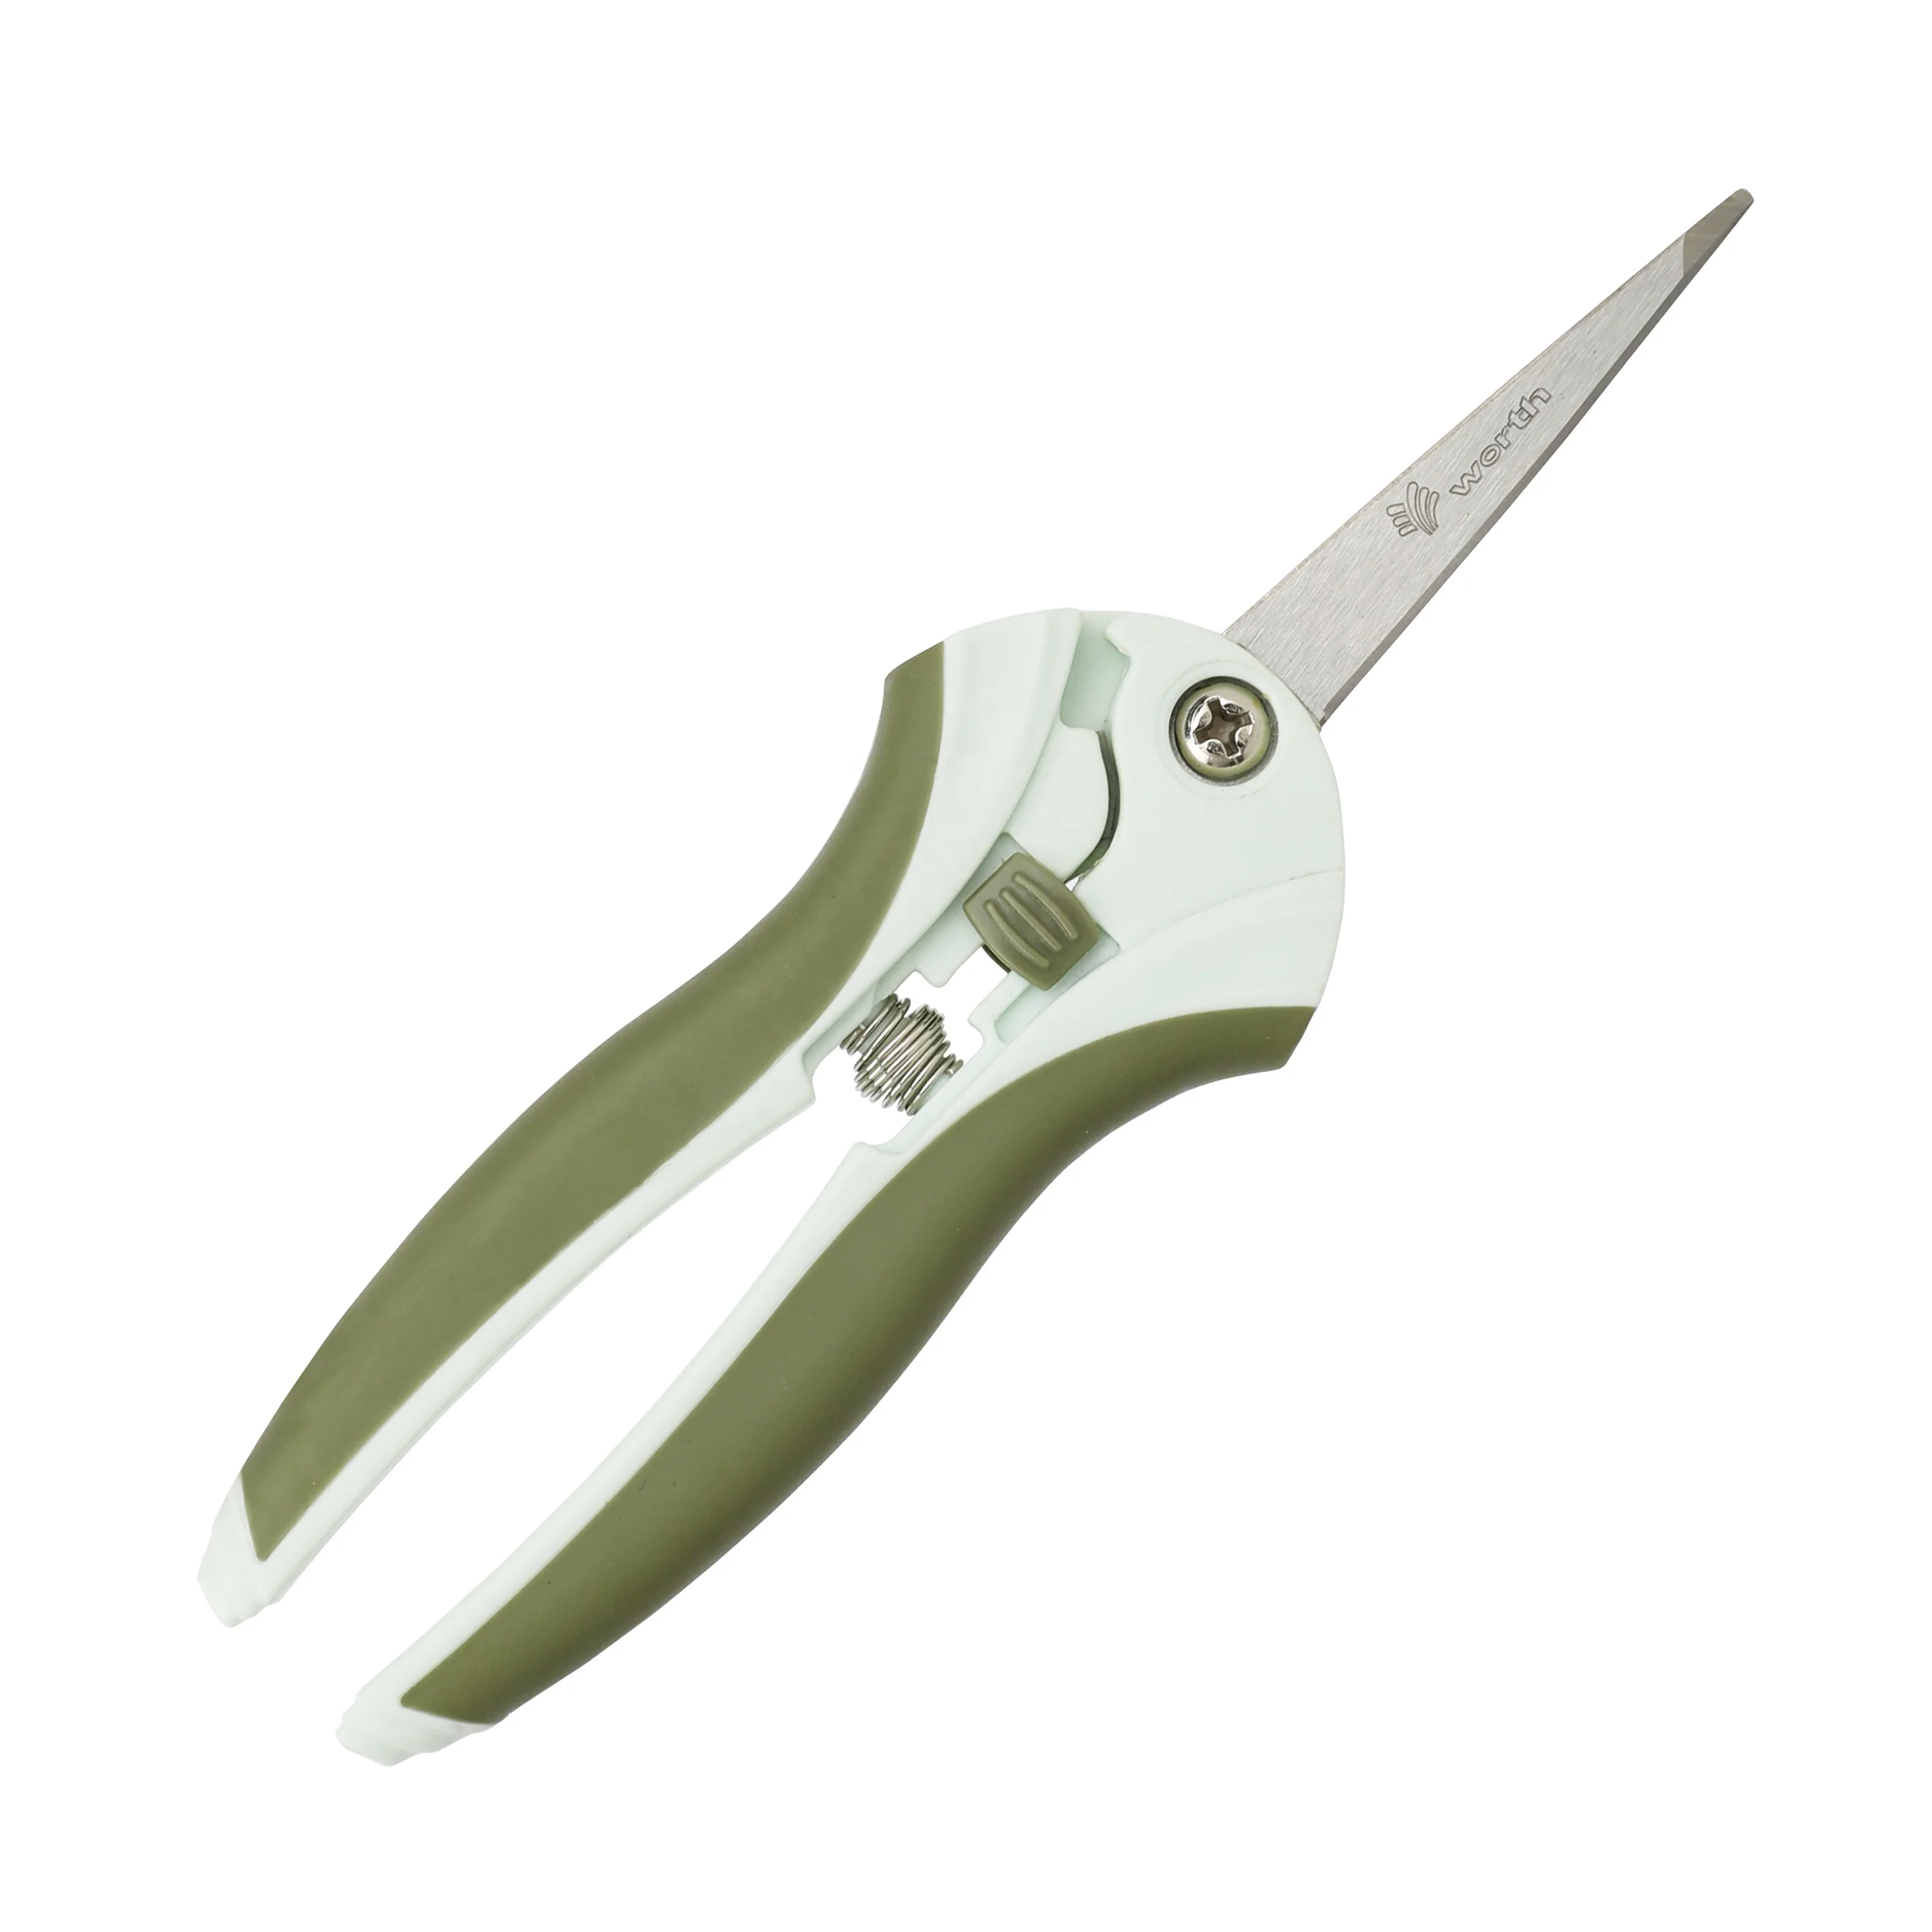 6 Inch Stainless Steel Blade ABS Handle Soft TPR Grip Gardening Flower Scissors Snips